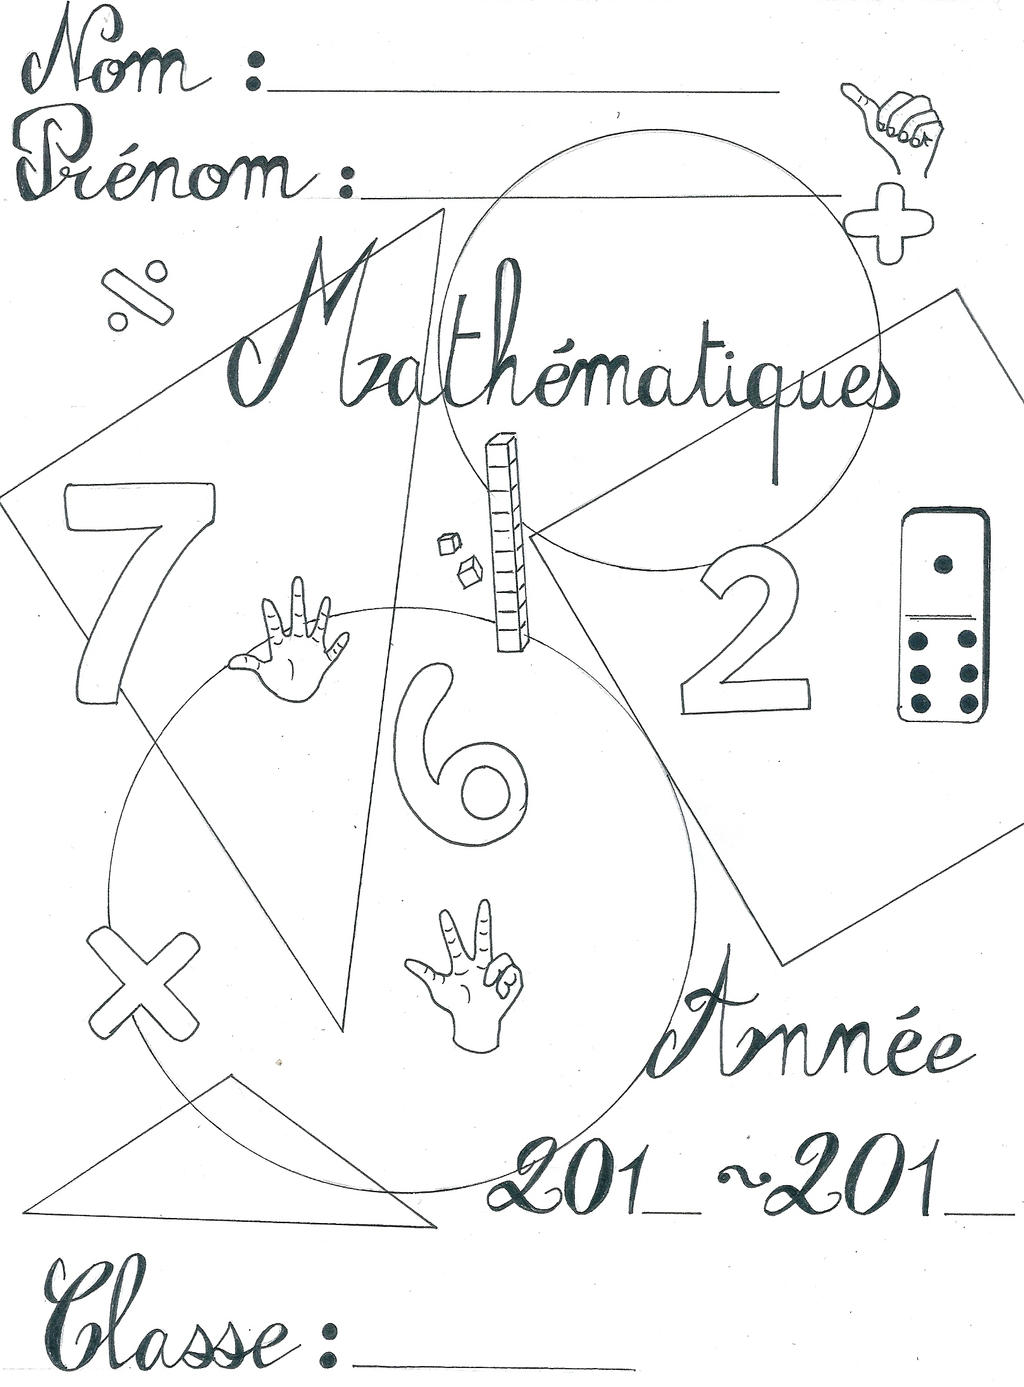 Page De Garde Math Page De Garde Maths by Nimidias on DeviantArt